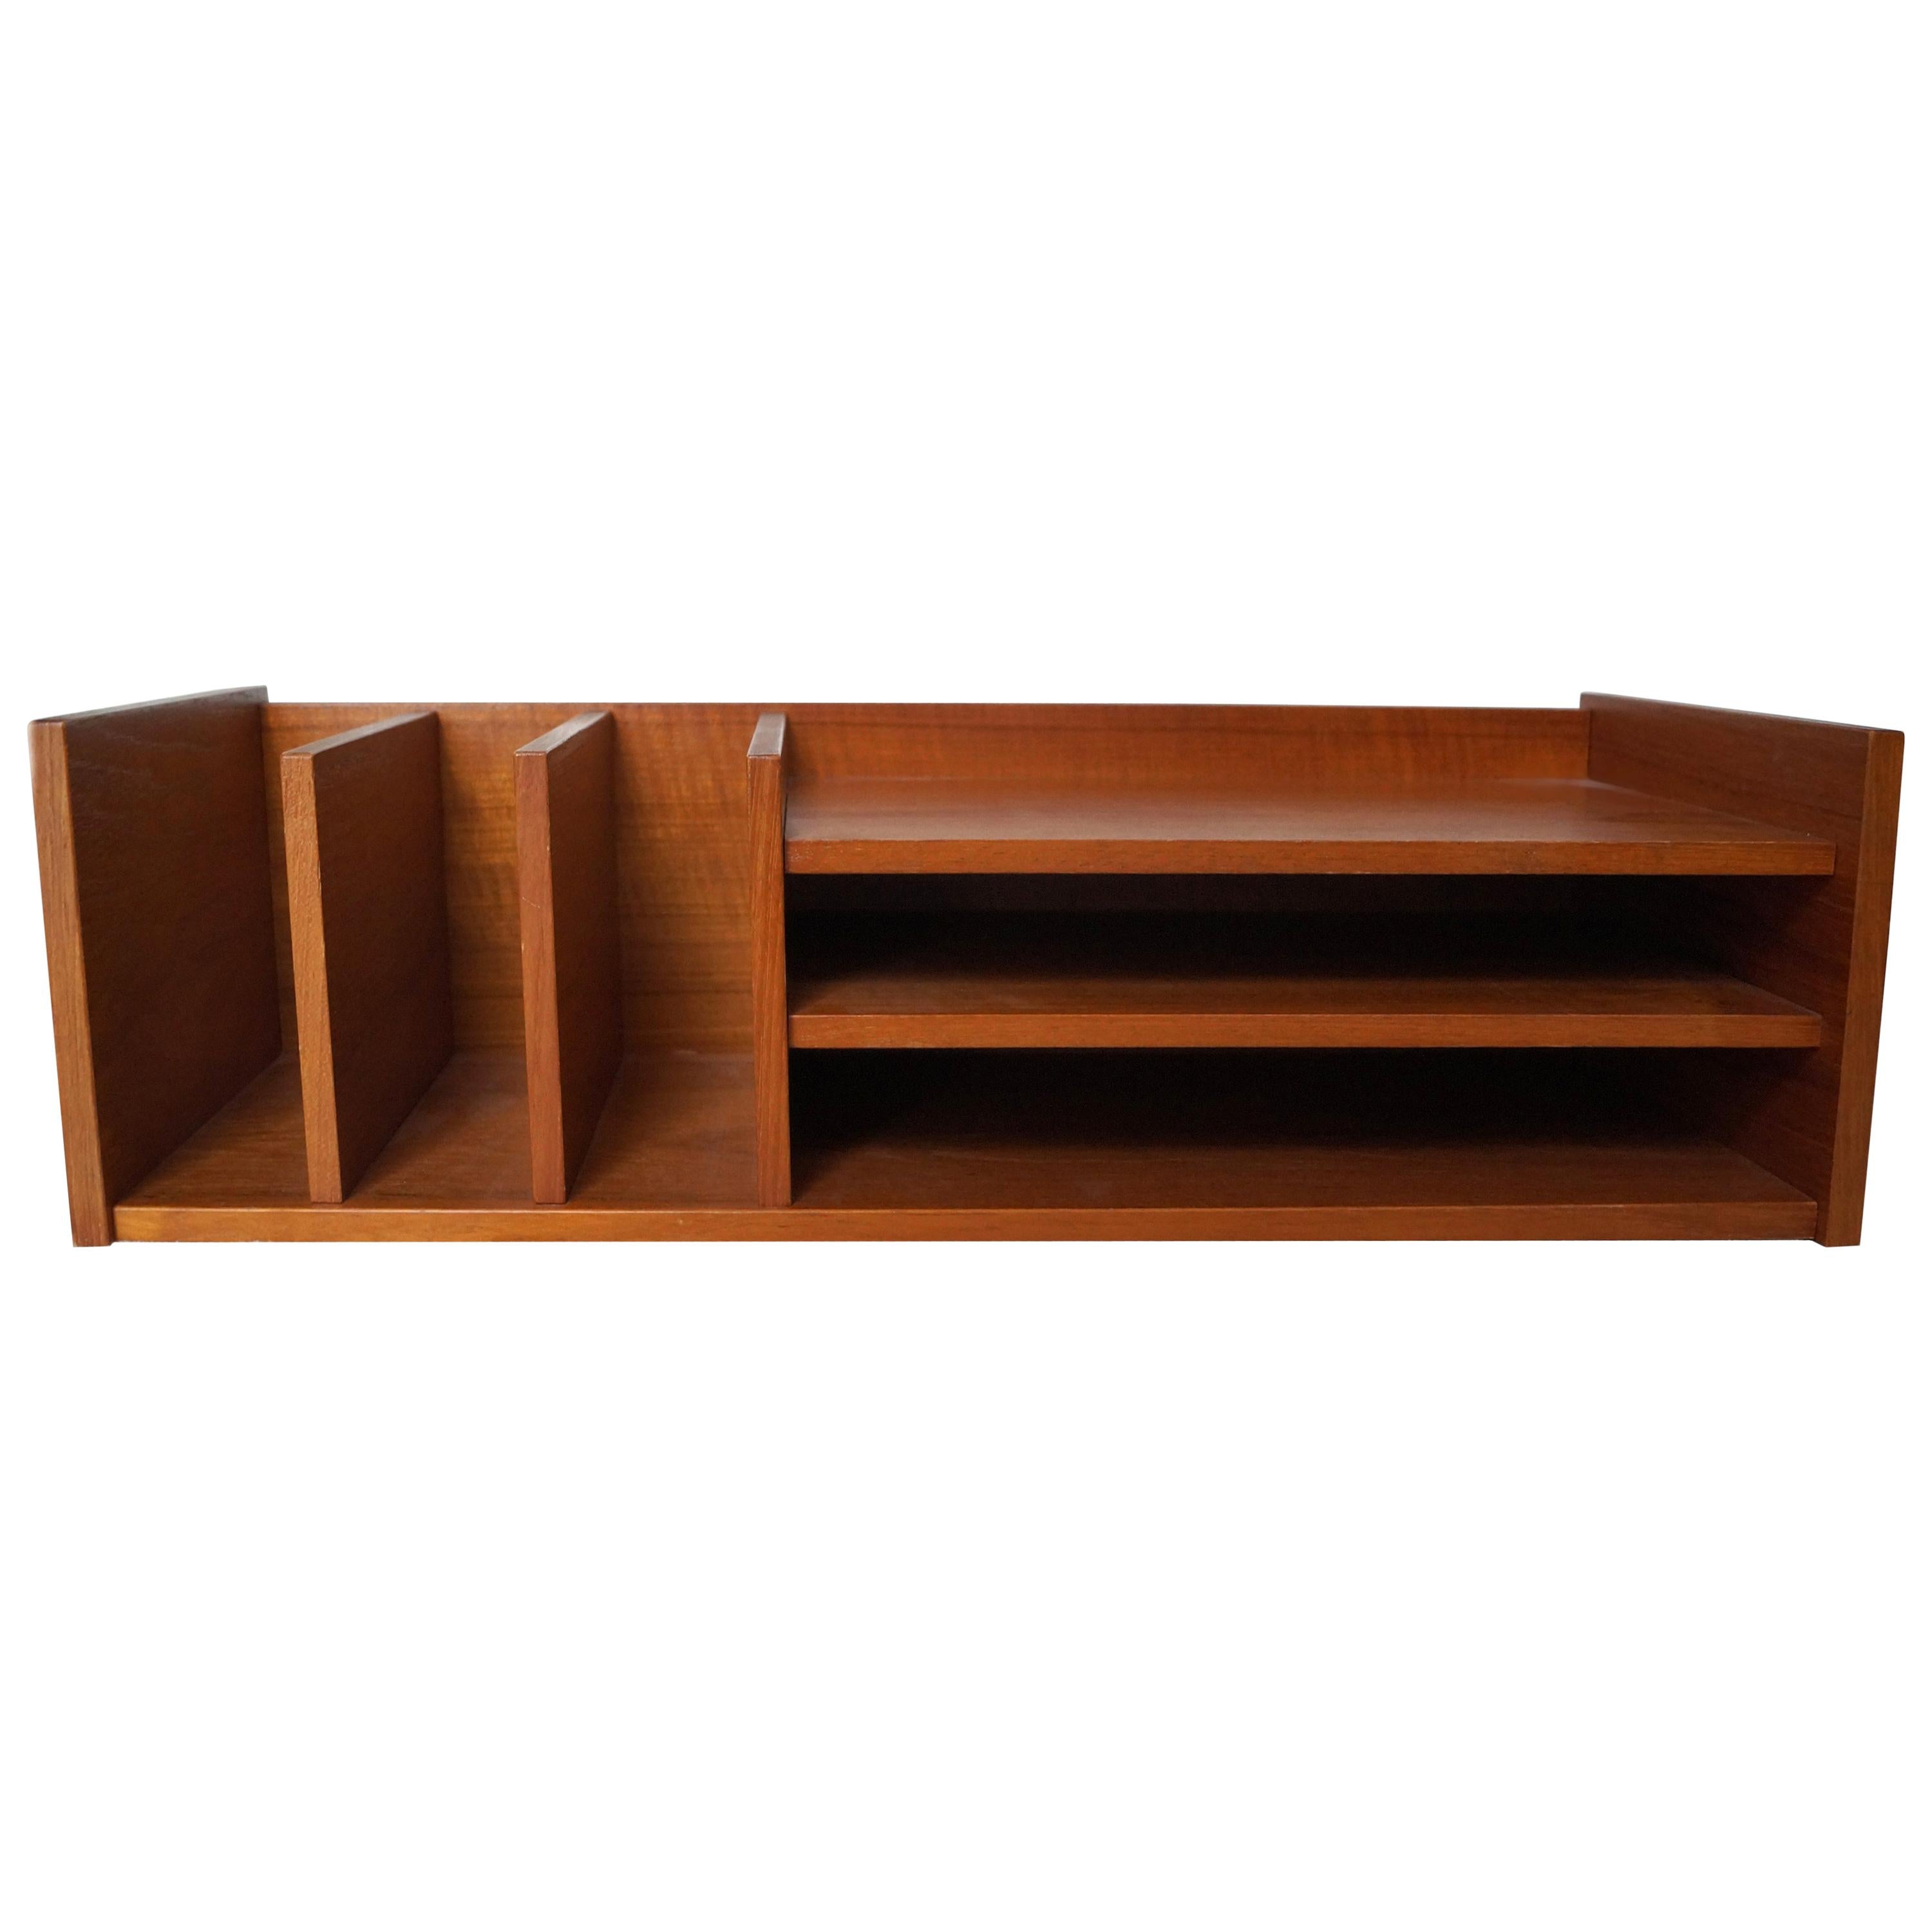 Pedersen & Hansen Danish Modern Teak Wood Desktop Mail Desk Organizer Shelf